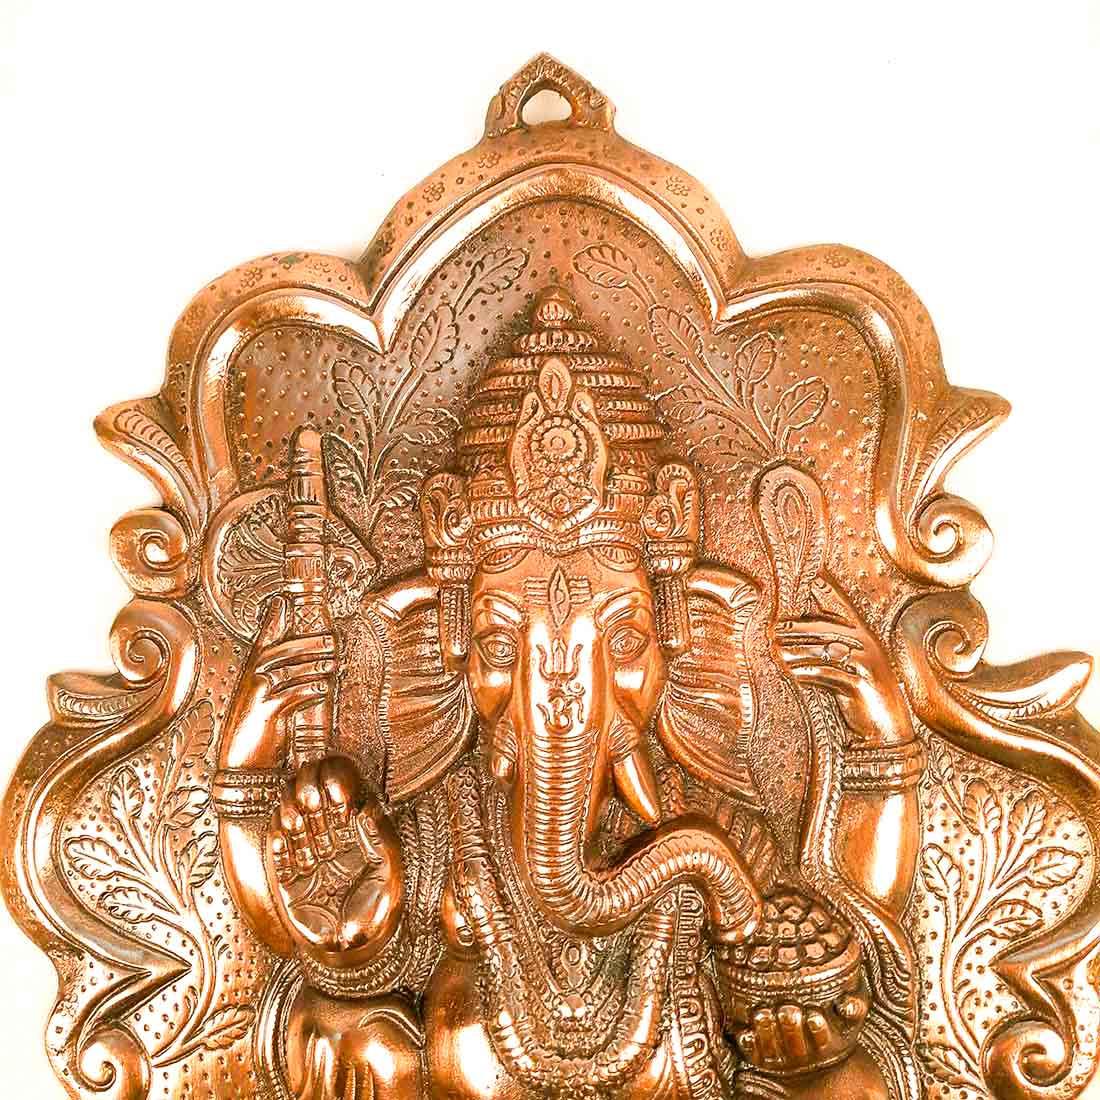 Ganesh Wall Hanging Statue | Ganesha Wall Idol for Puja, Home, Living Room Decor | Religious & Spiritual Wall Art | Diwali & Housewarming Gift - 16 Inch